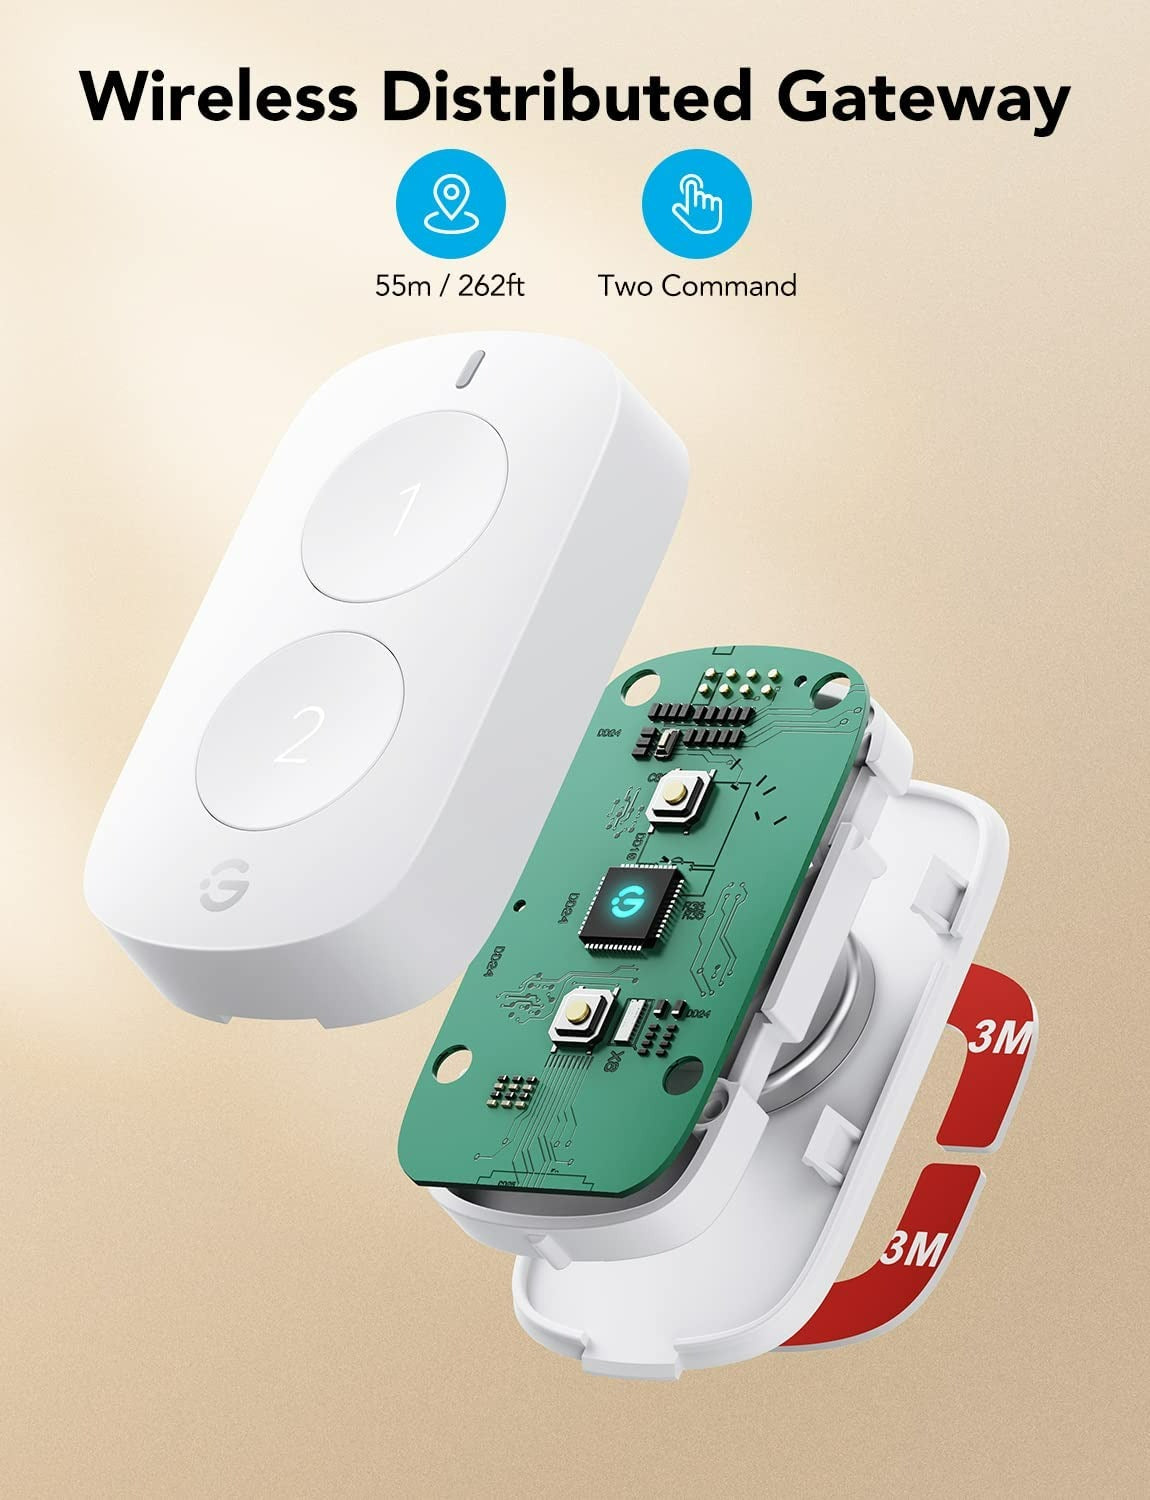 GoveeLife Smart Mini Double Button Switch